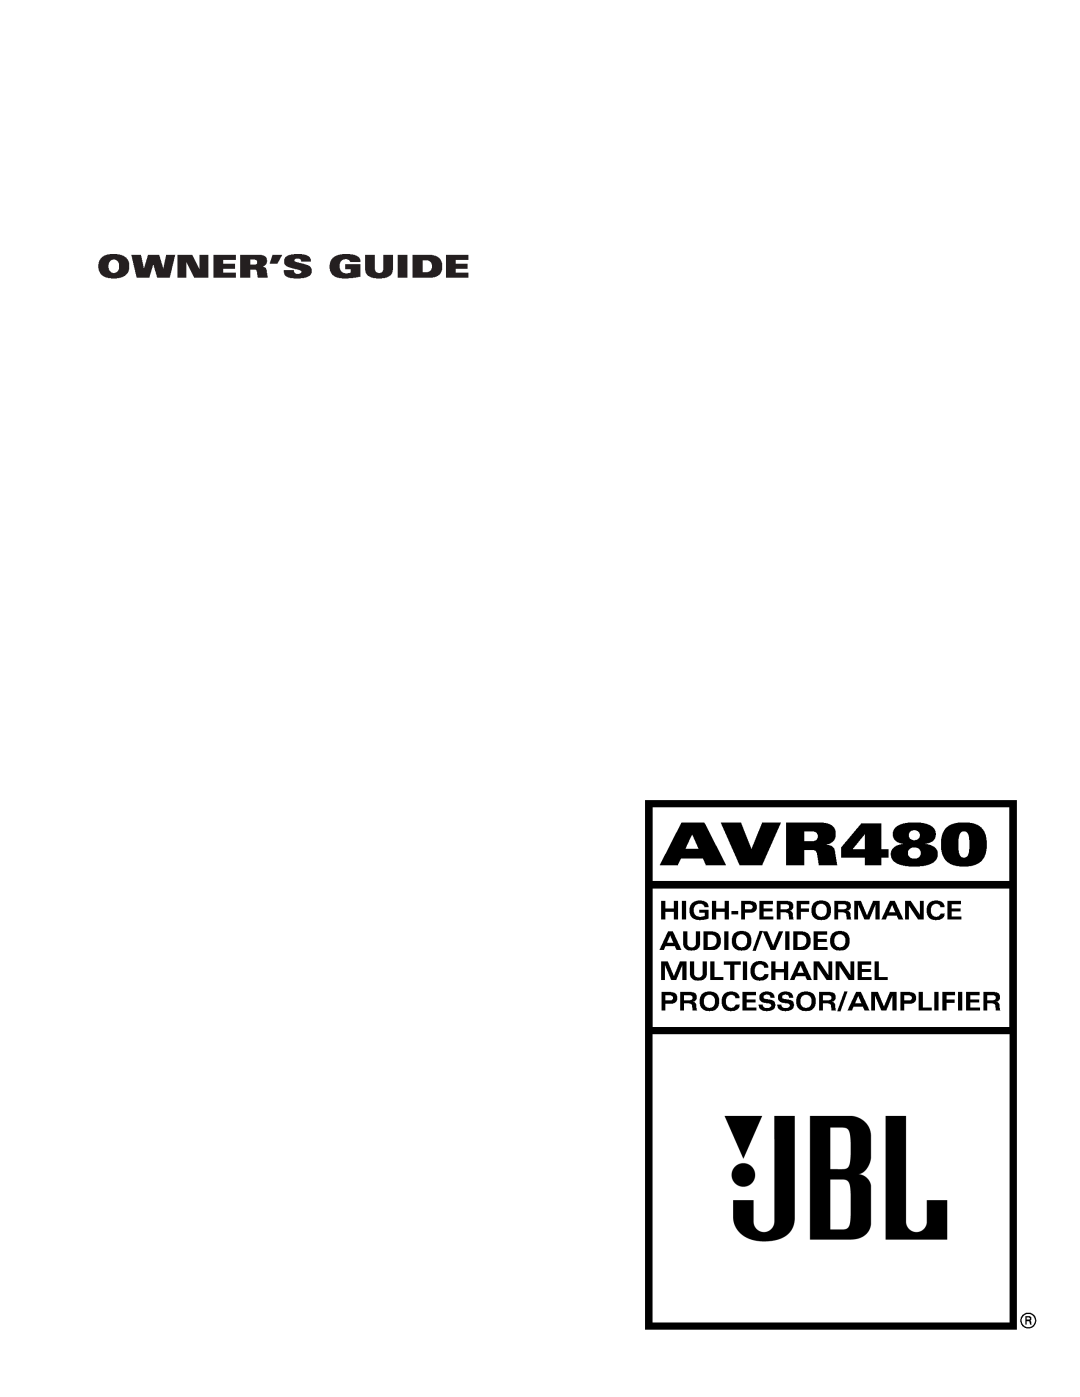 JBL AVR480 manual Owner’S Guide, High-Performance Audio/Video Multichannel, Processor/Amplifier 